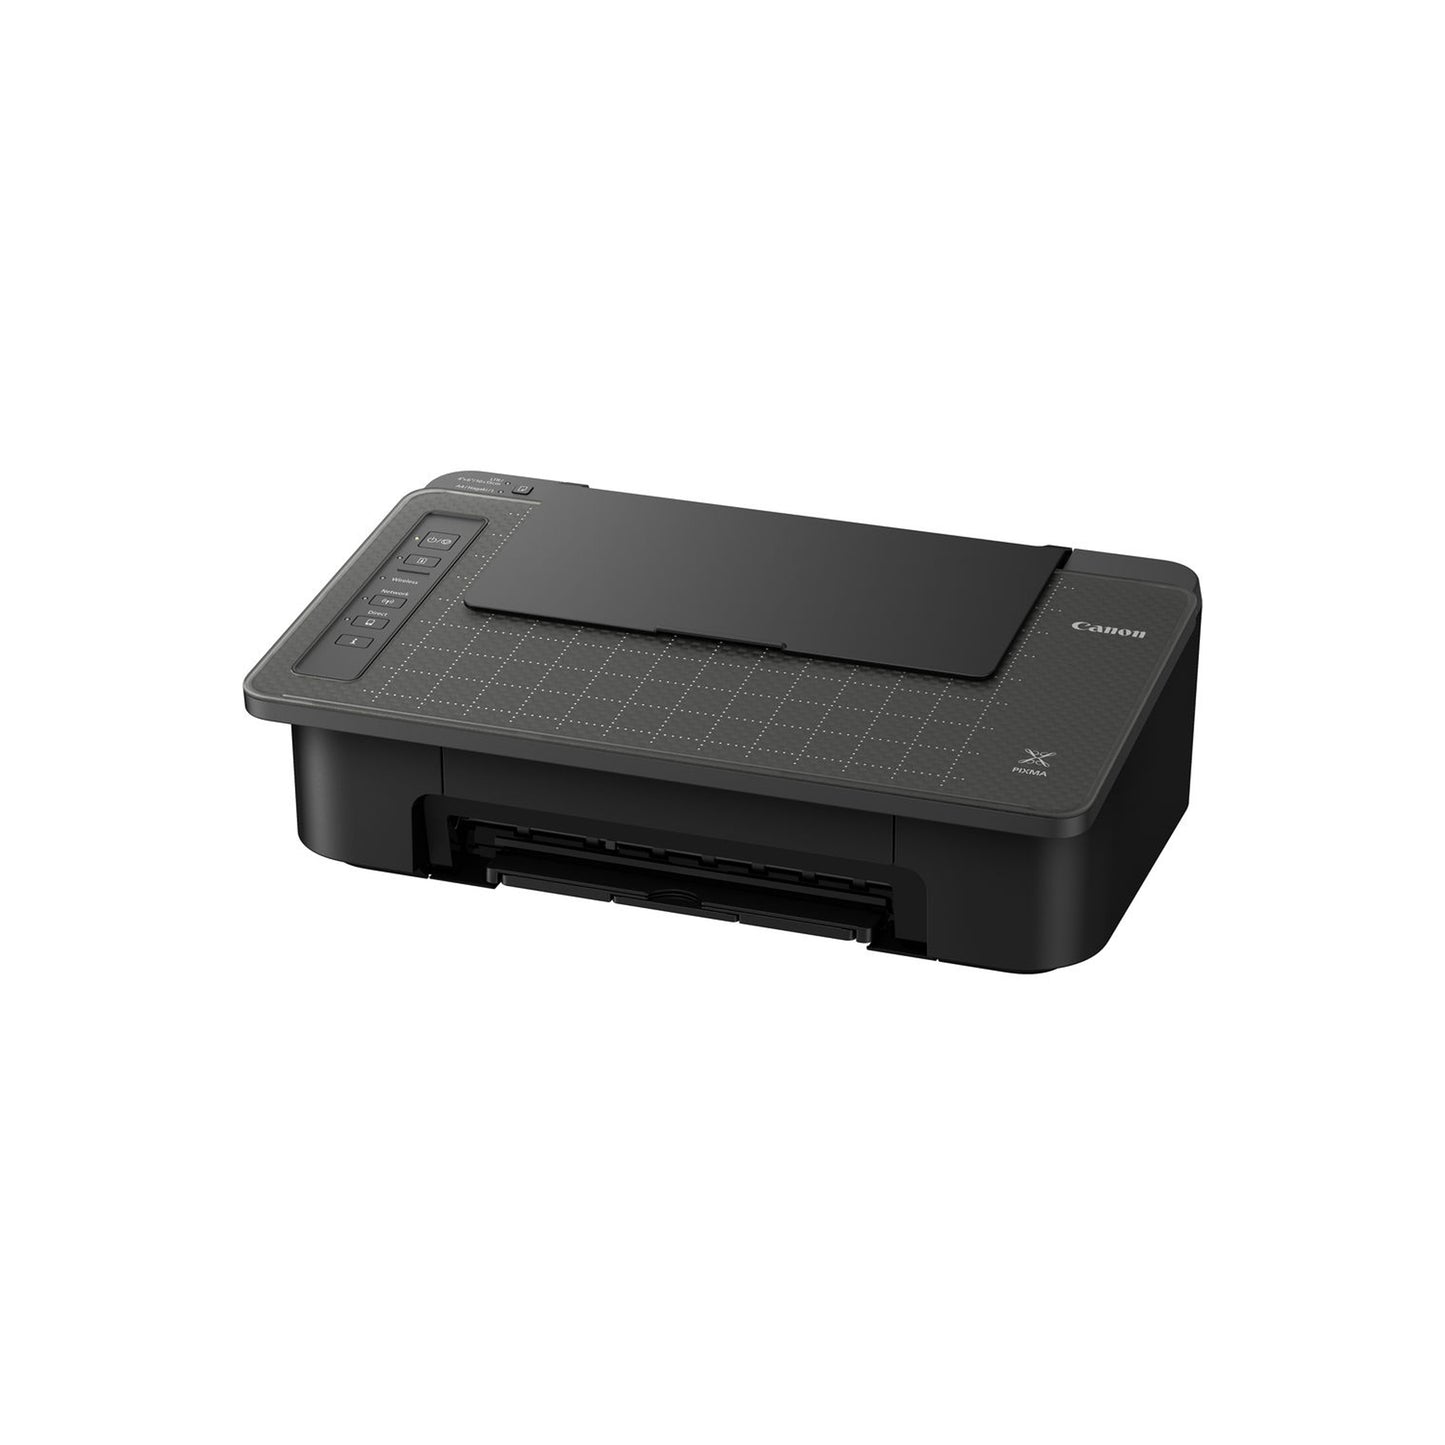 Canon TS302 Wireless, Single Function Inkjet Printer, Black, Works with Alexa